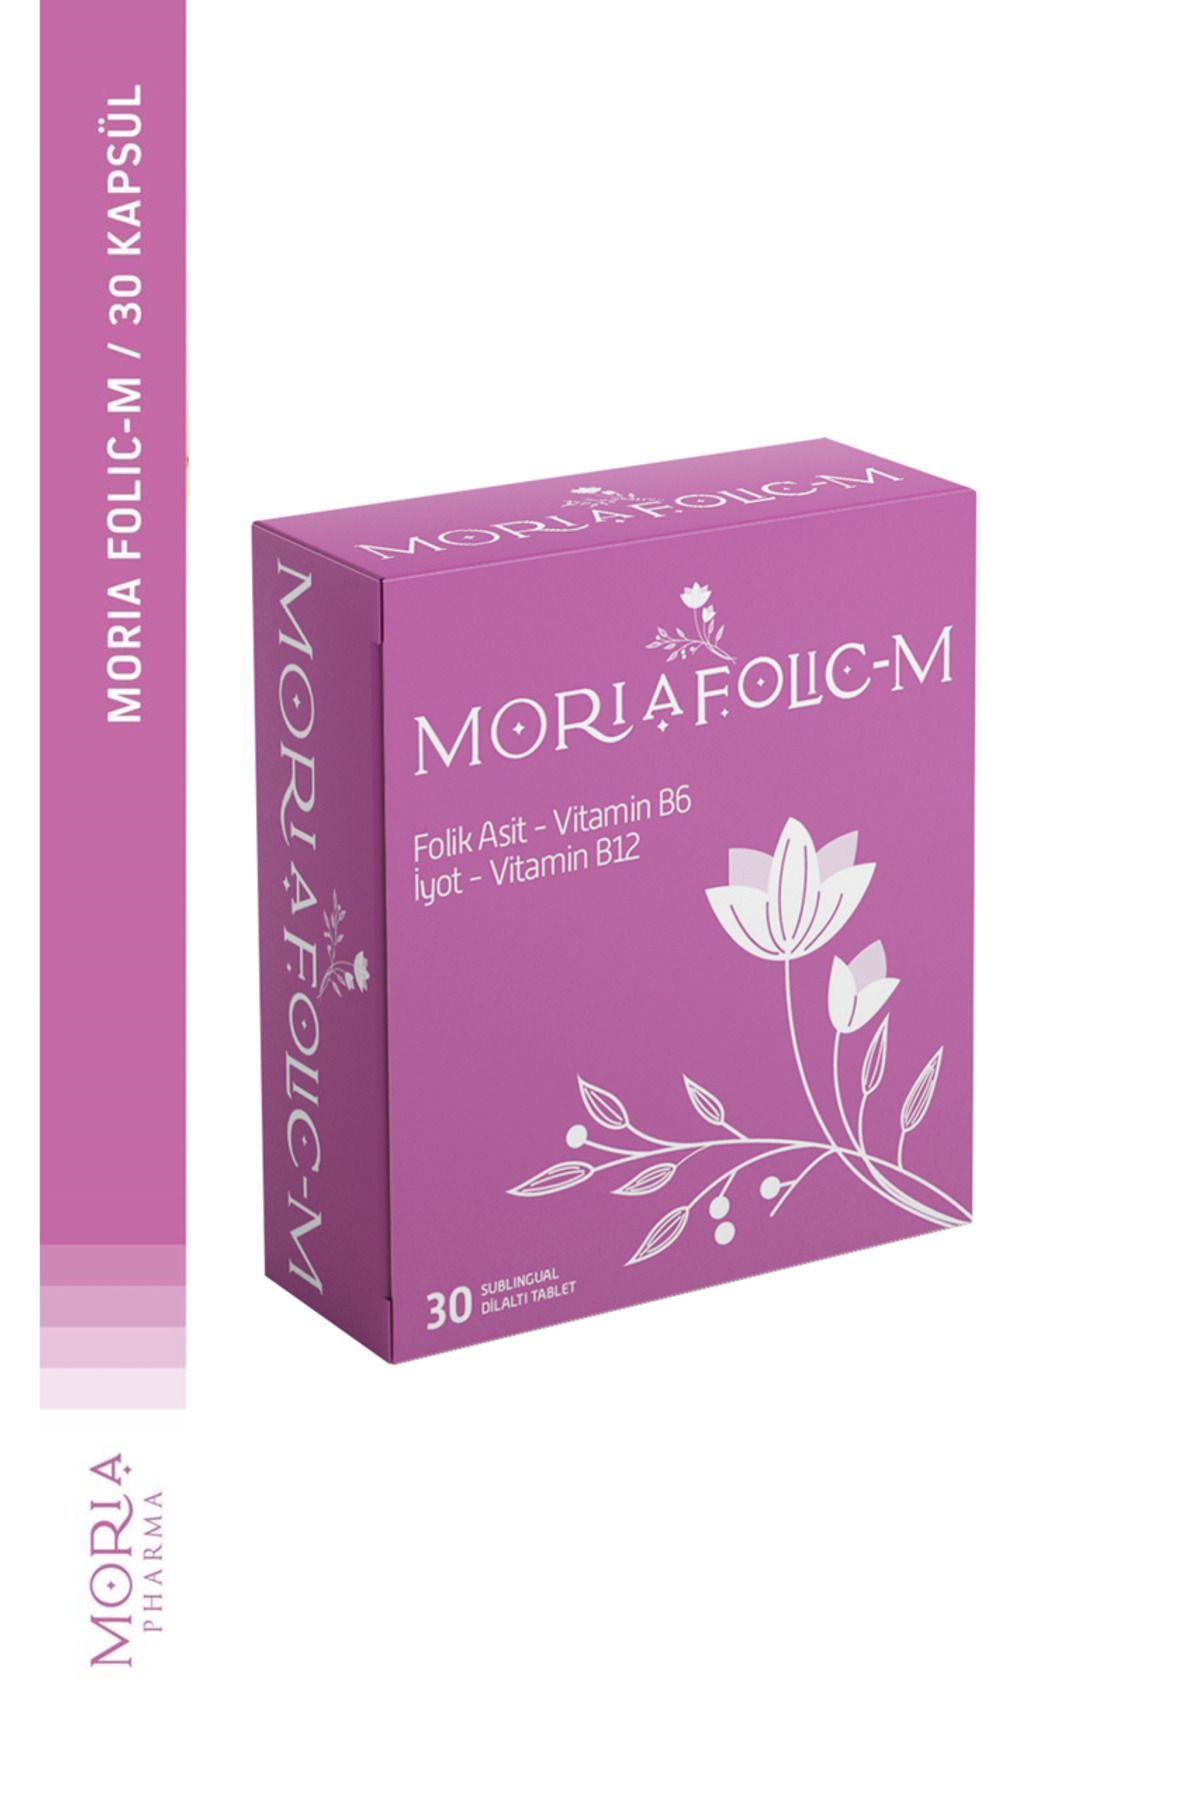 Moria Pharma Moria Folic-M Folik Asit-Vitamin B6 İyot-Vitamin B12 30 Dilaltı Tablet